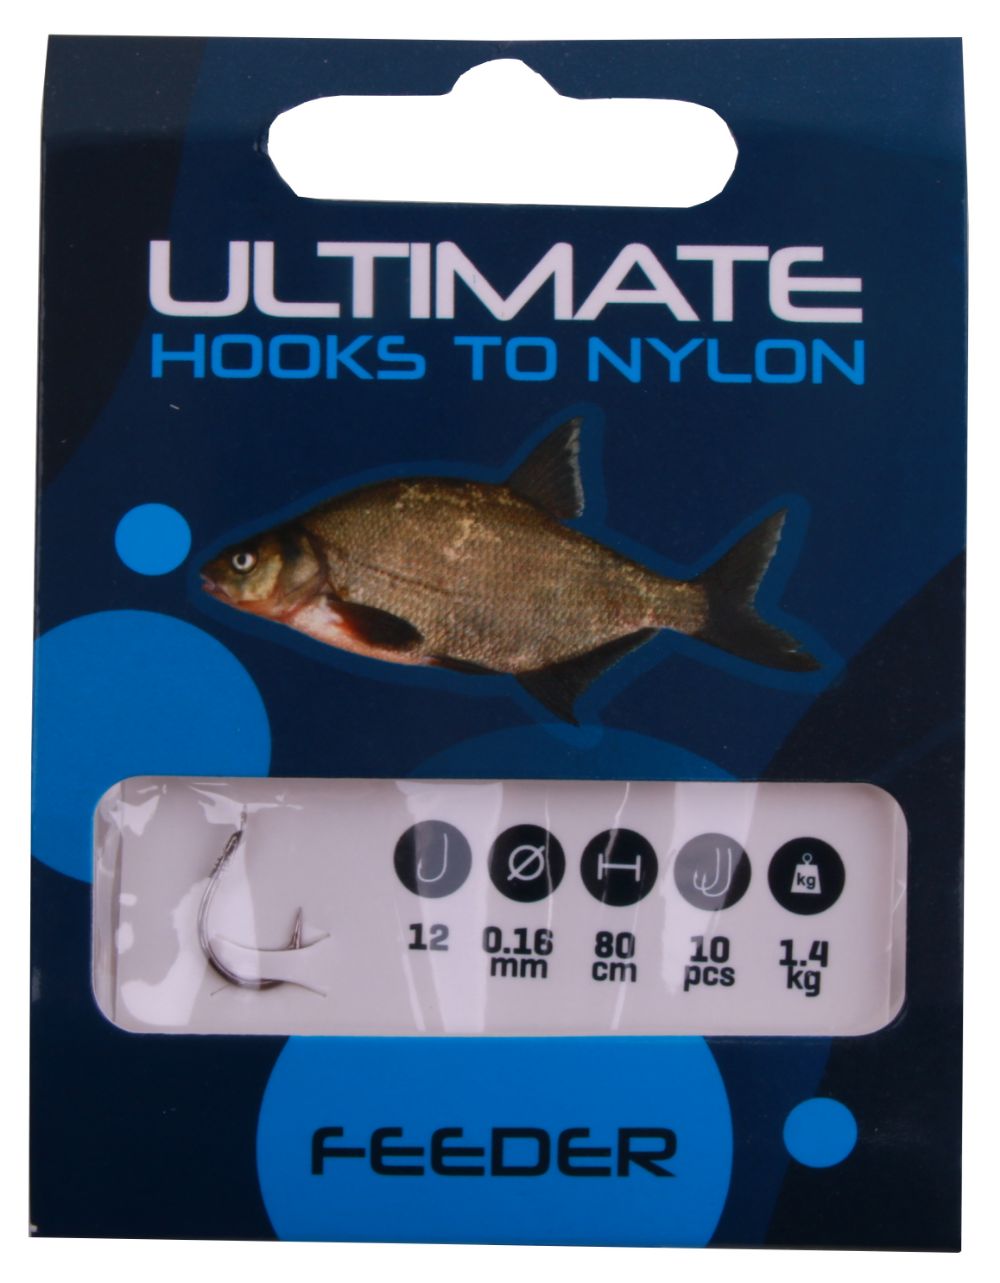 Ultimate hooks to nylon feeder size 12 0,16mm 80cm 10pcs